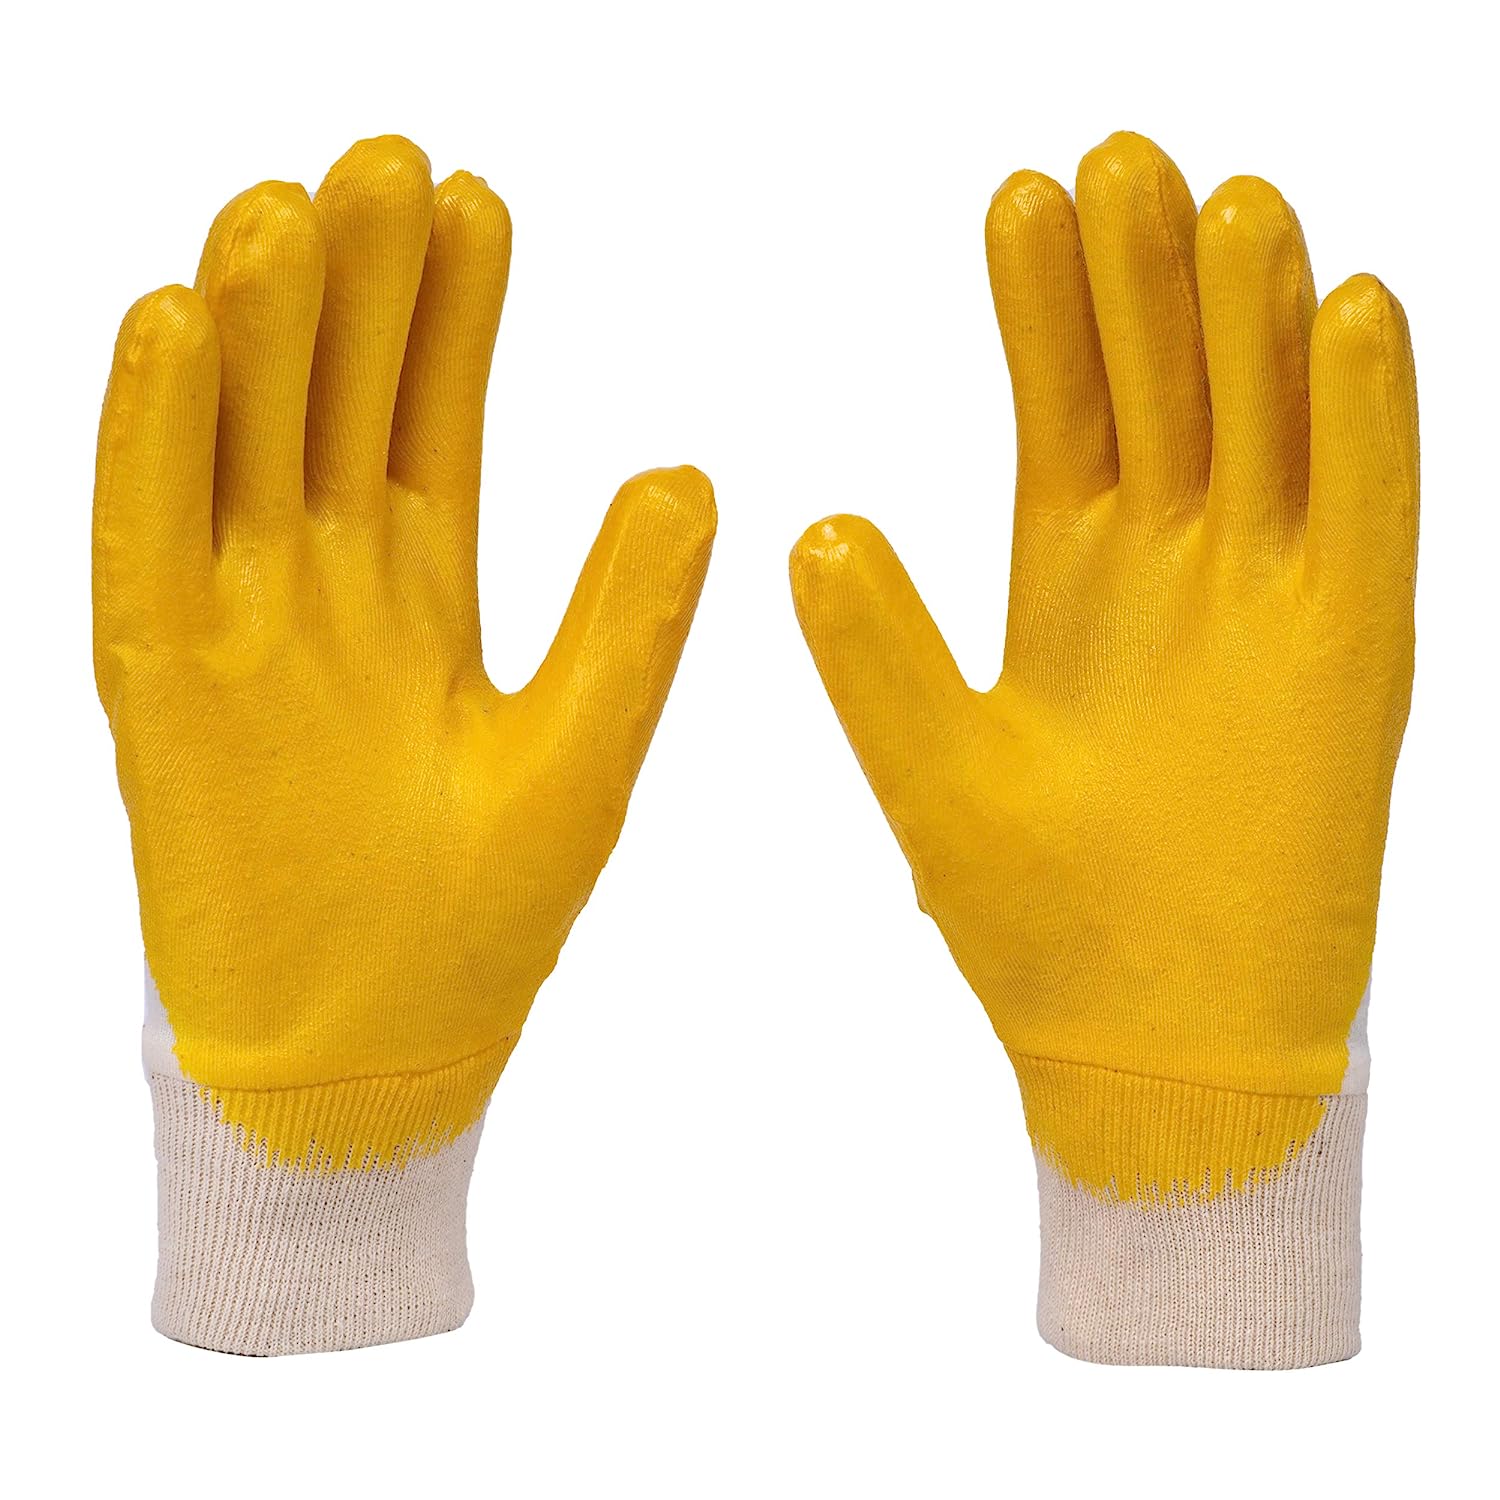 Yellow and White Cotton Nitrile Glass Handling Gloves - Safety Gloves -  Safeline Solutions, Bejai, mangalore, Karnataka